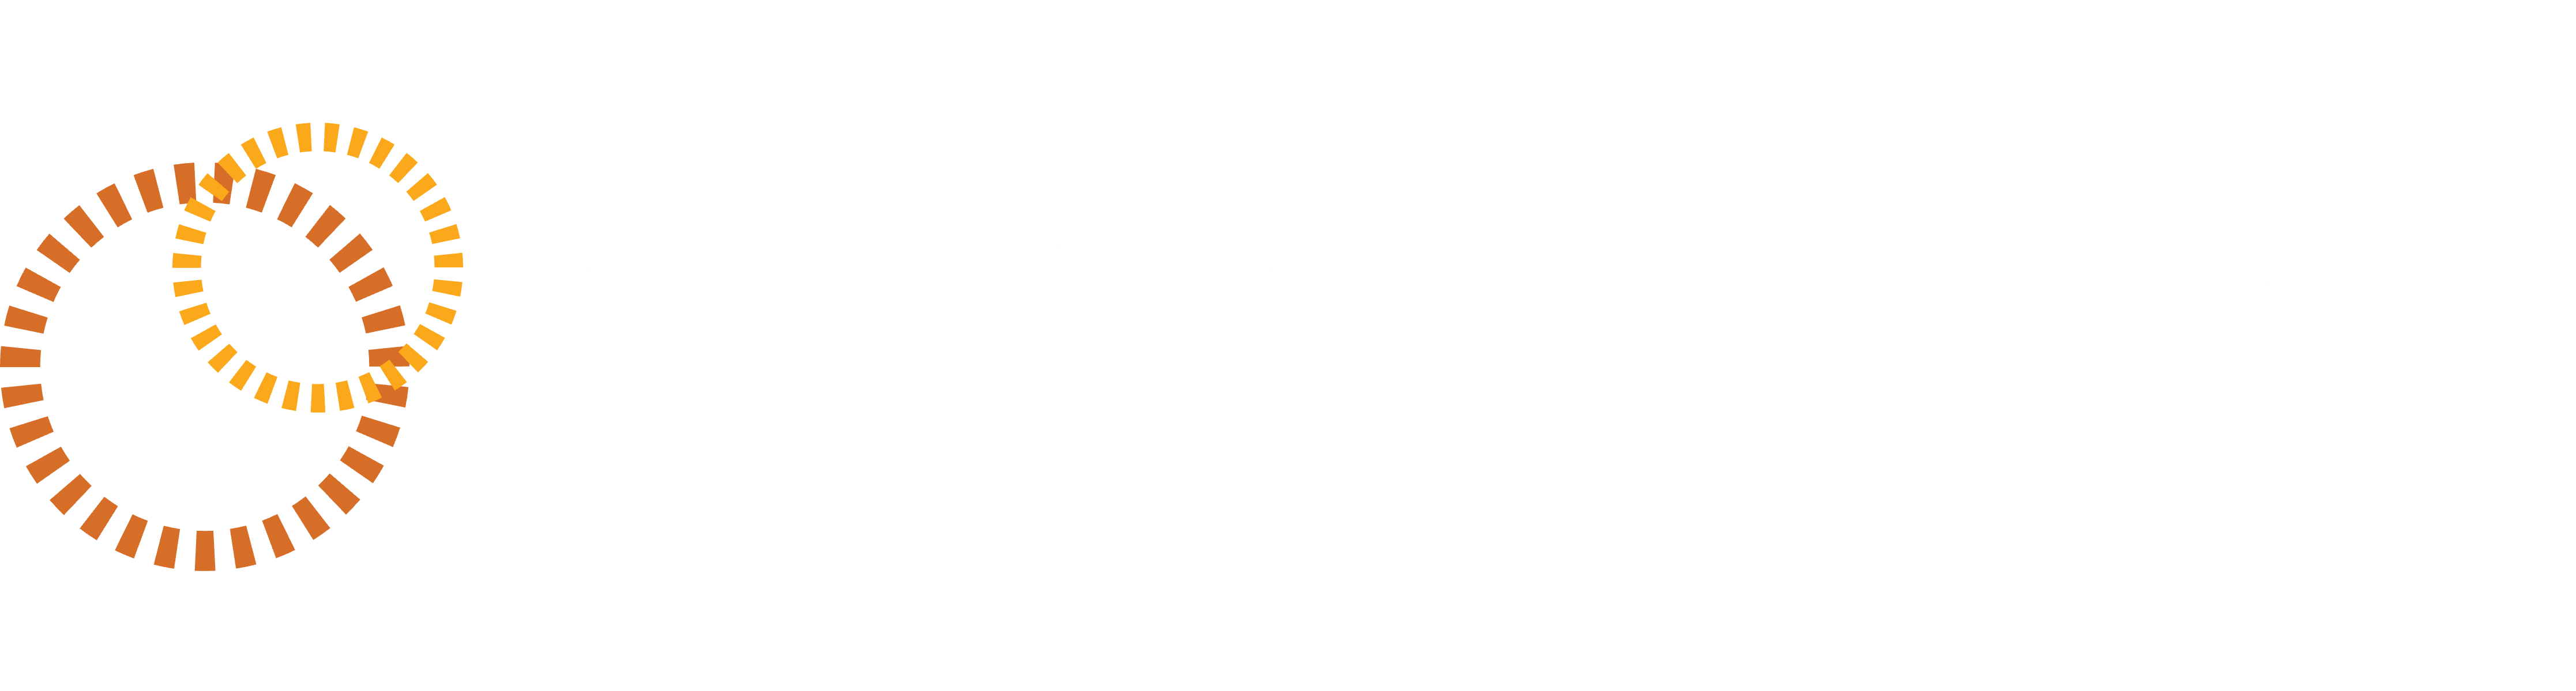 Spearity_Reframe_logo-prototype-white